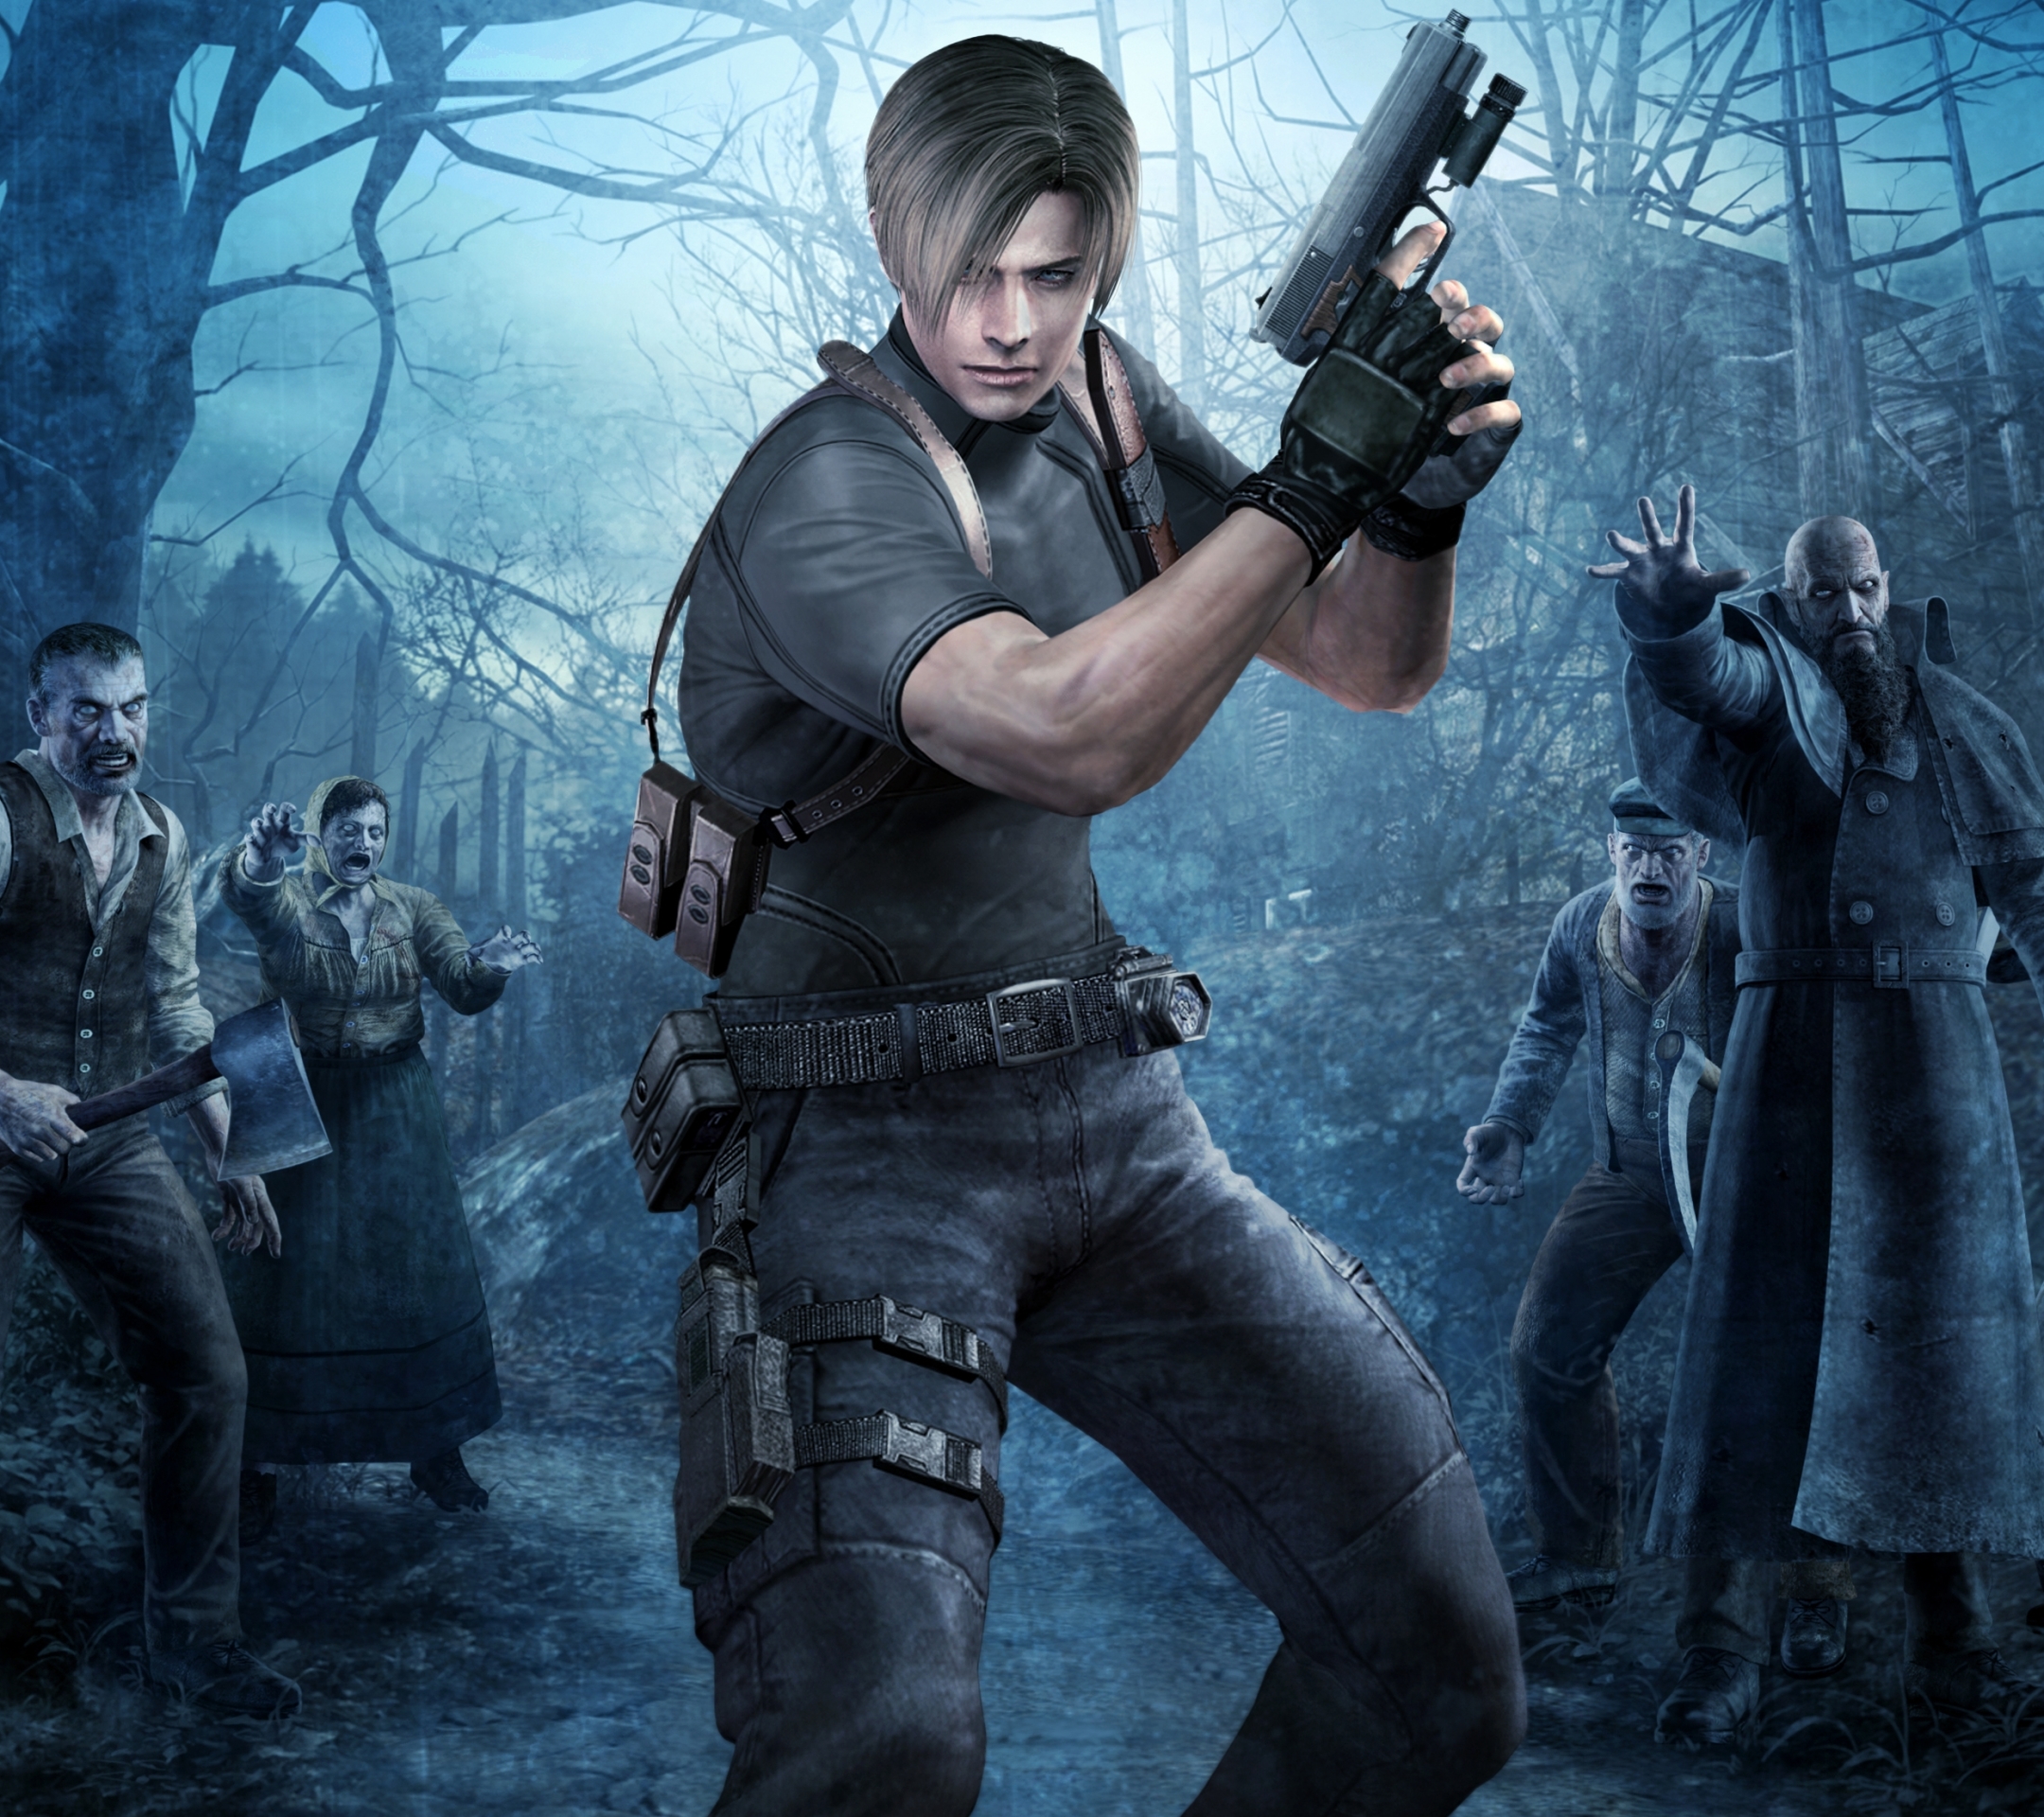 Ashley Resident Evil 4 Wallpapers - Wallpaper Cave